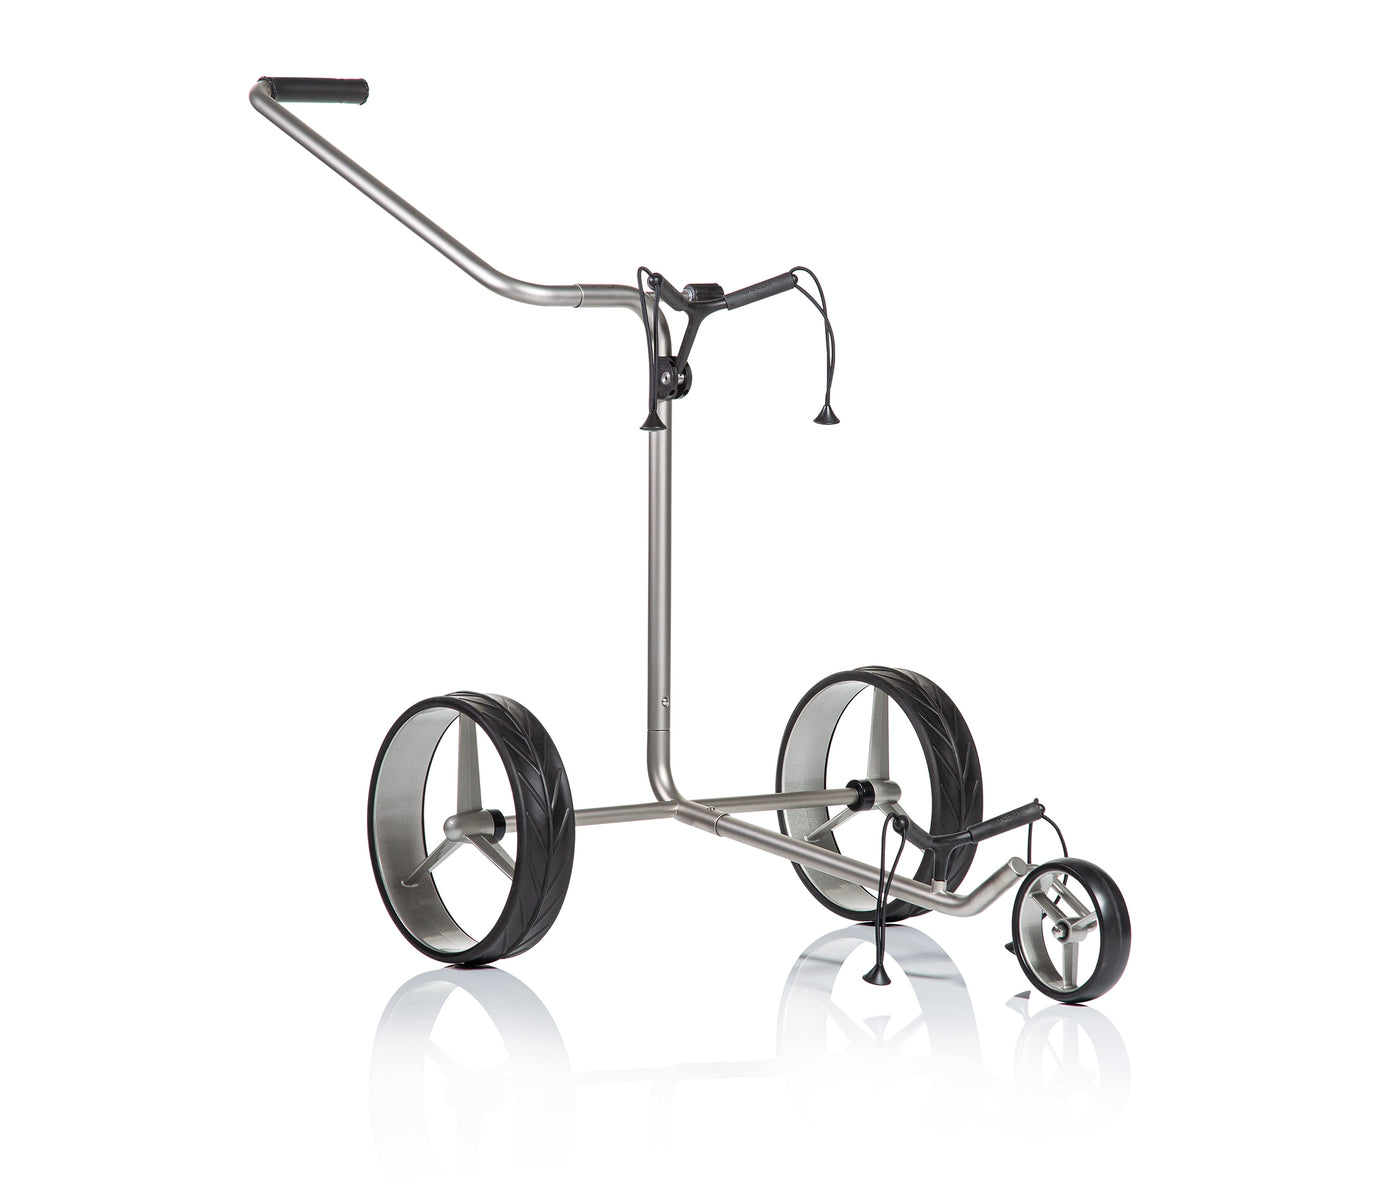 Chariot de golf JuCad Edition S 3 roues - porte-sac sportif